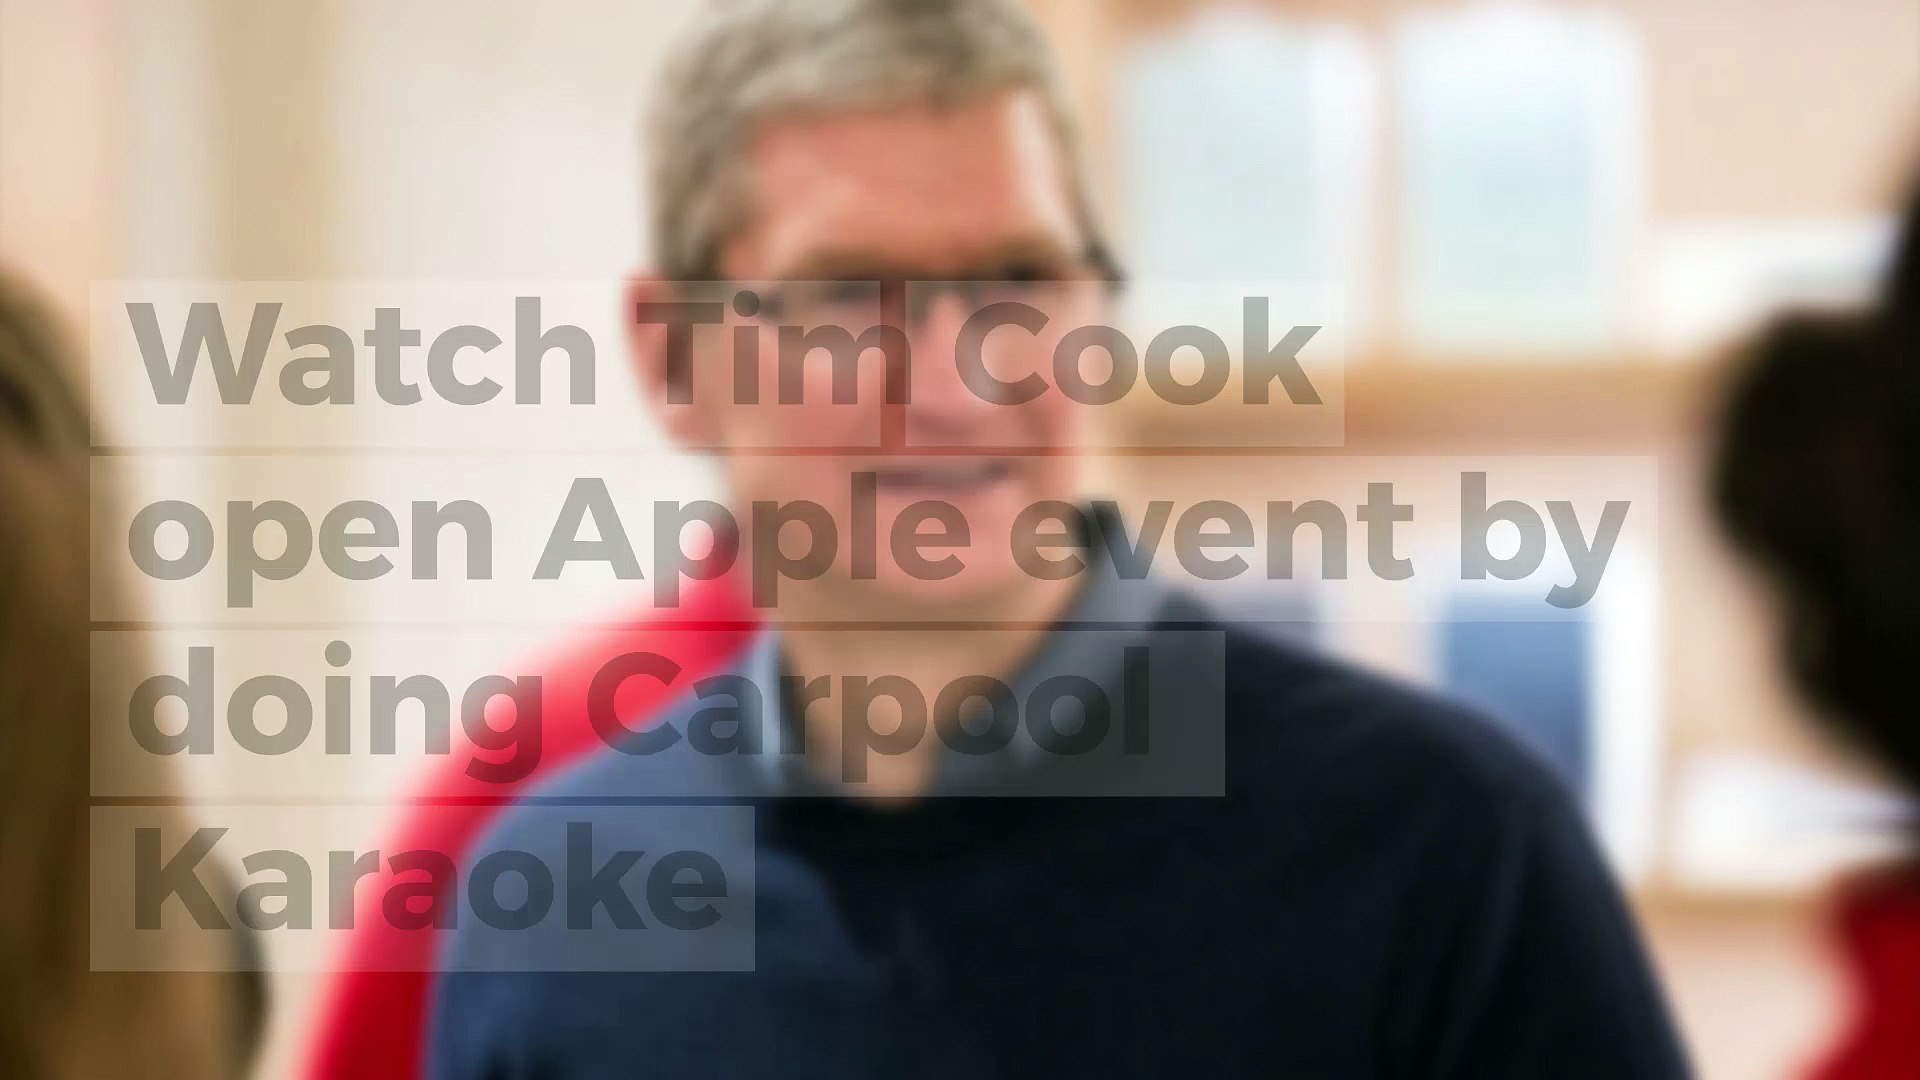 ⁣Watch Tim Cook open Apple event by doing Carpool Karaoke